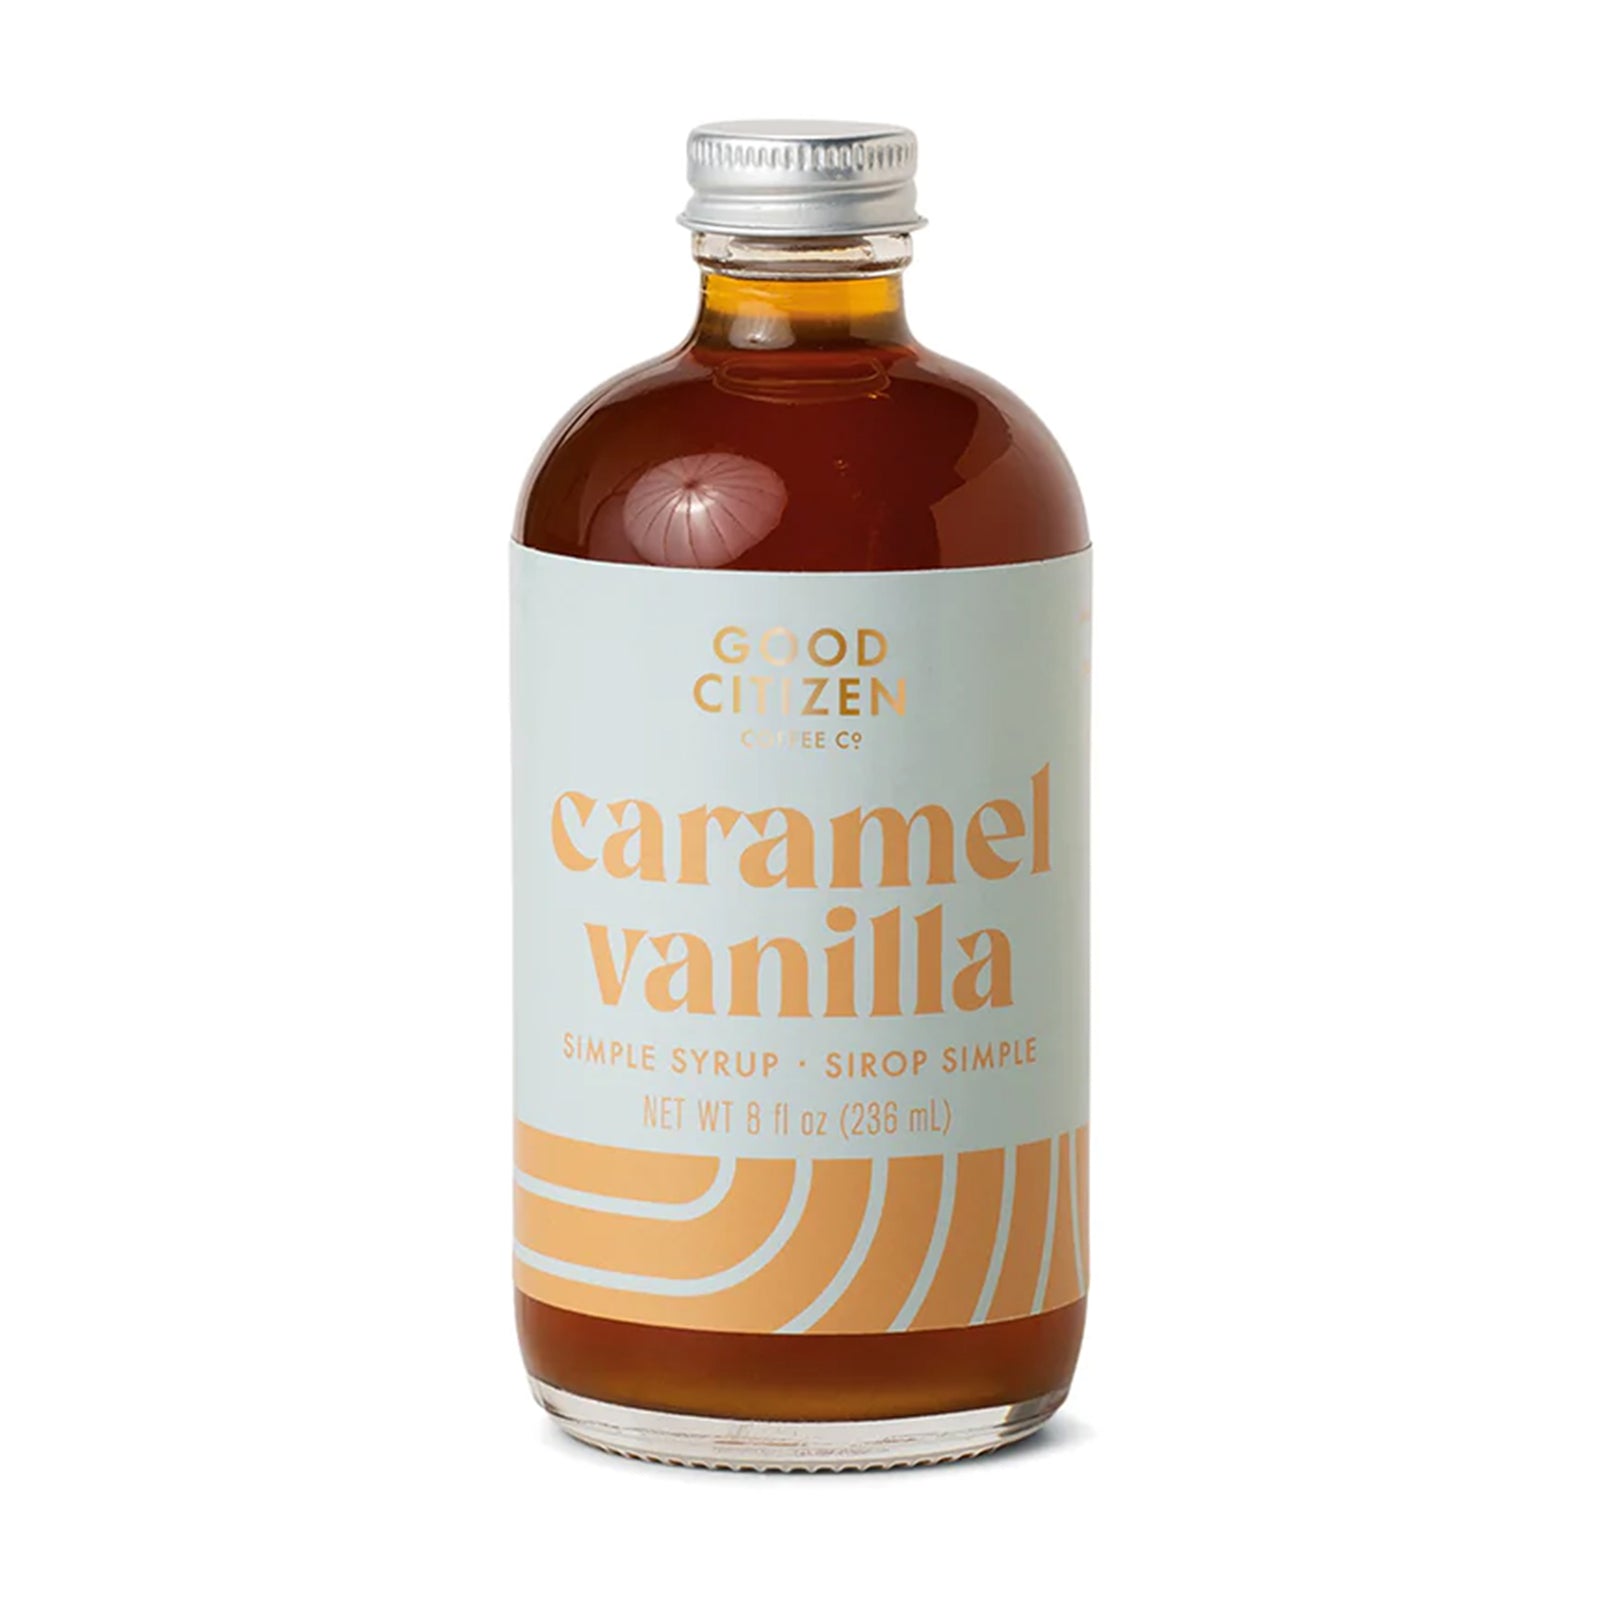 Caramel Vanilla Simple Syrup